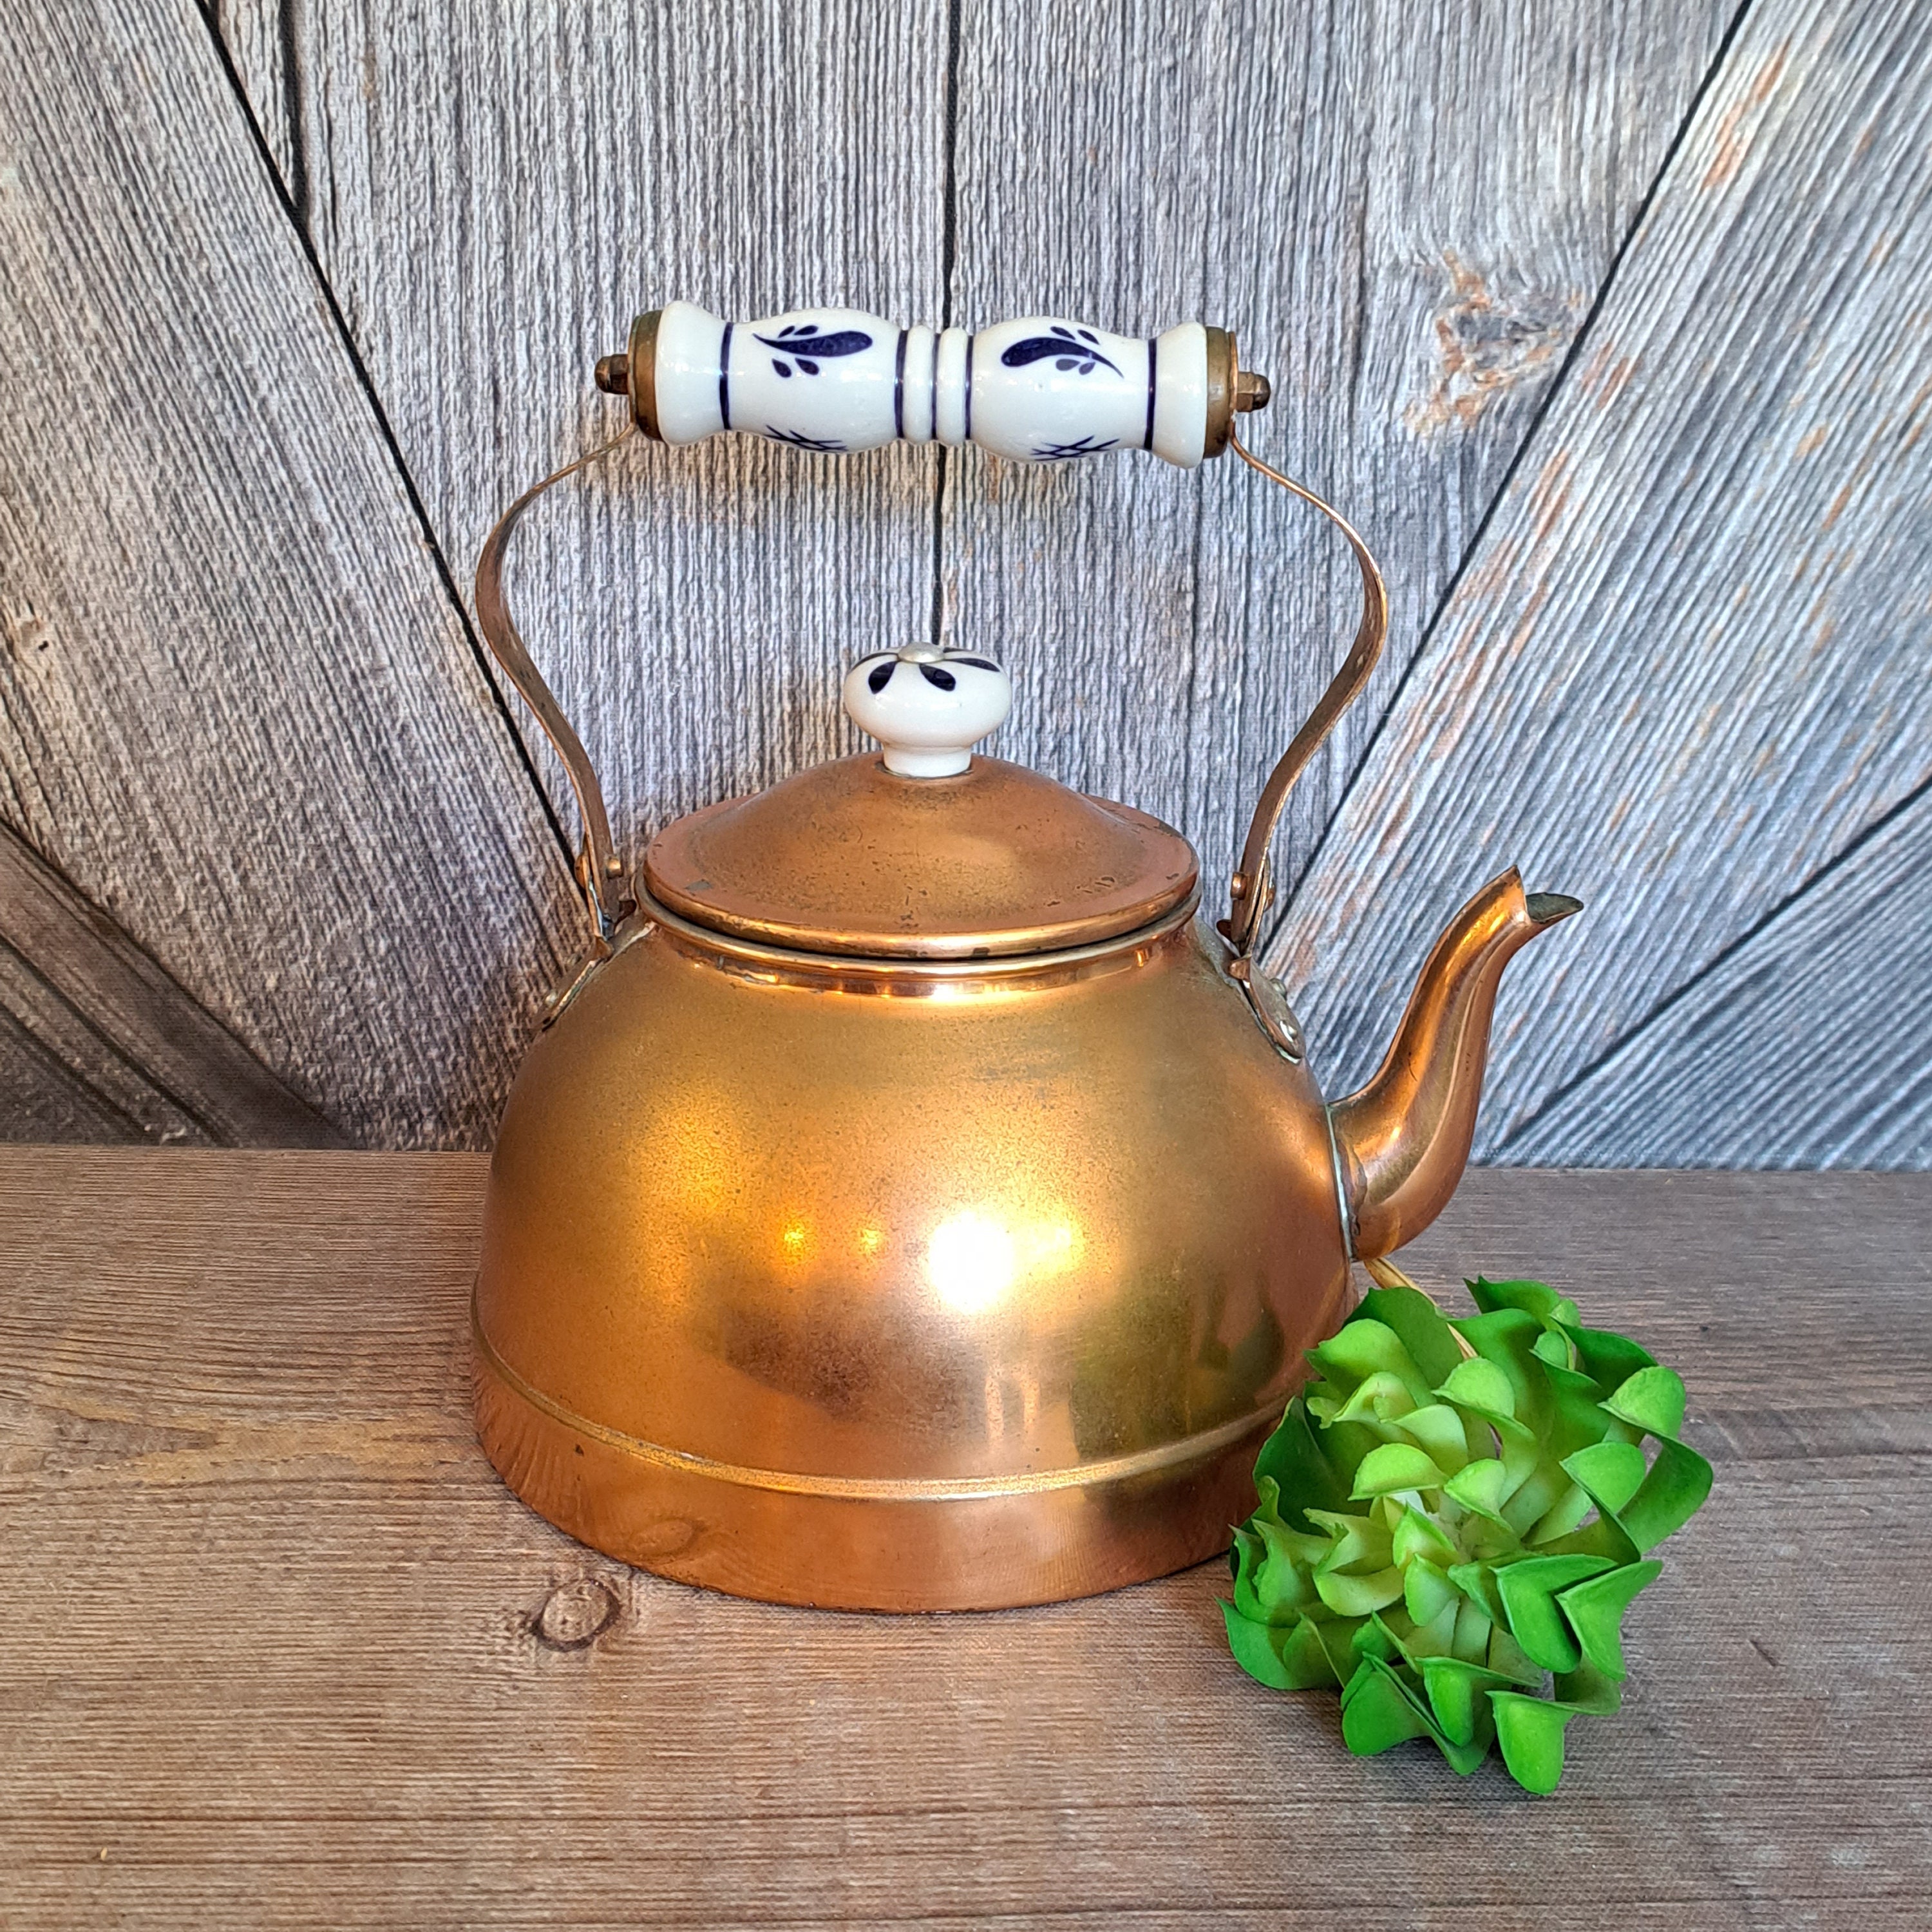 Vintage Tea Pot Tea Kettle Copper Color Cheerful Enamelware Kitchen Decor  70s Kitschy Wedding Gift for Friend Housewarming Gift 